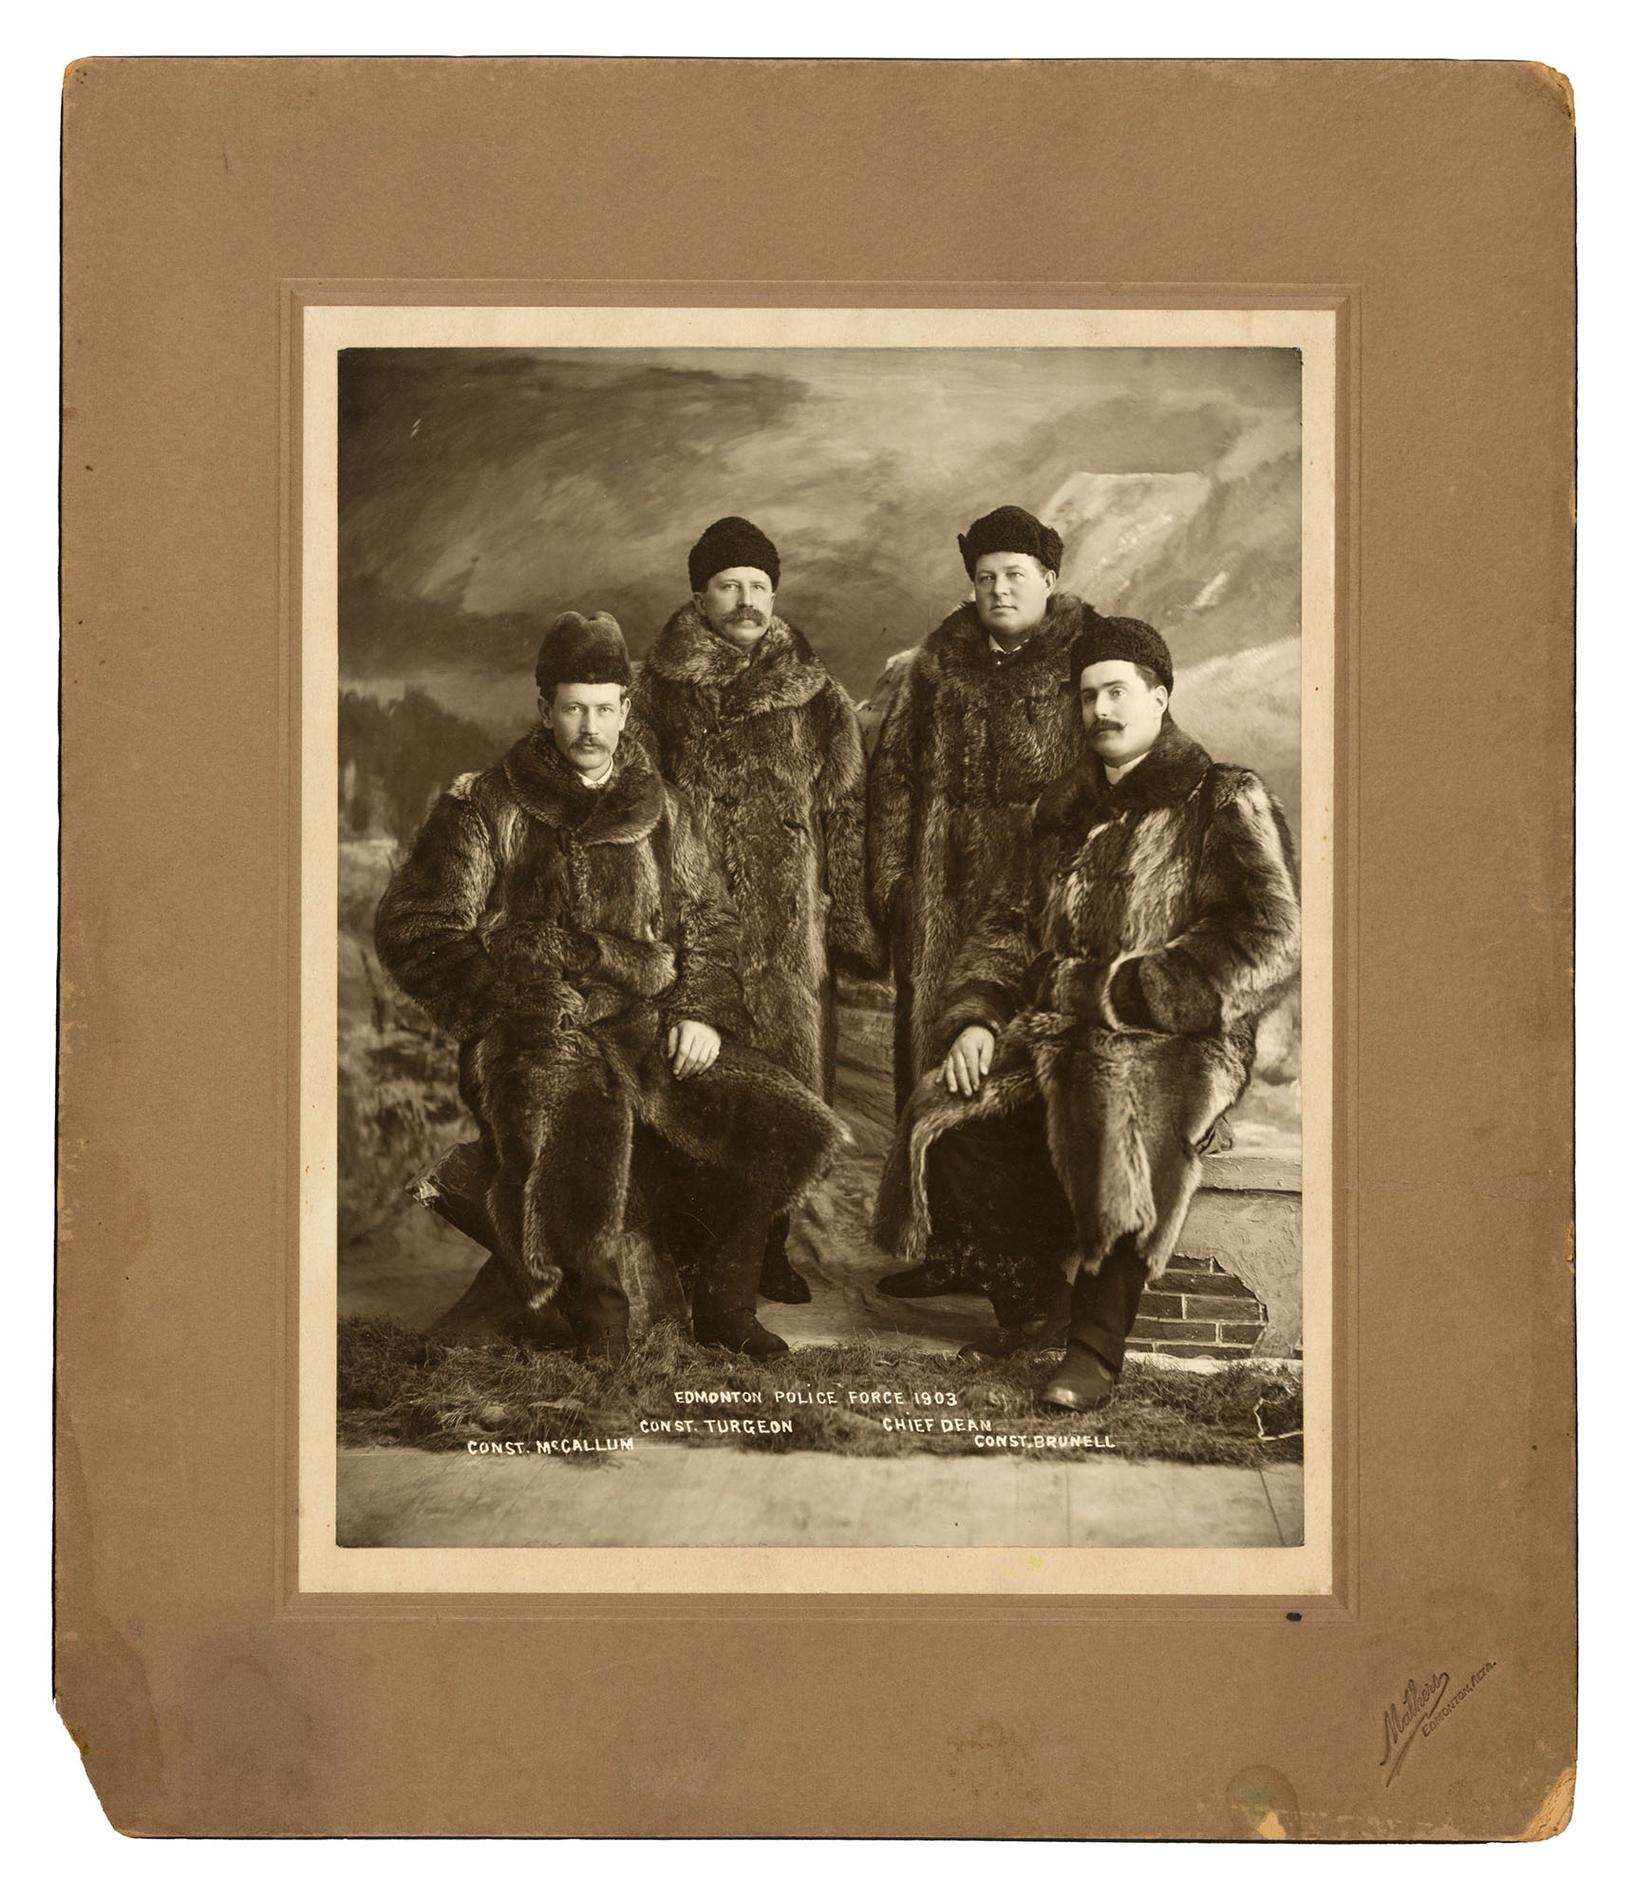 A formal studio portrait of four men in fur coats and hats